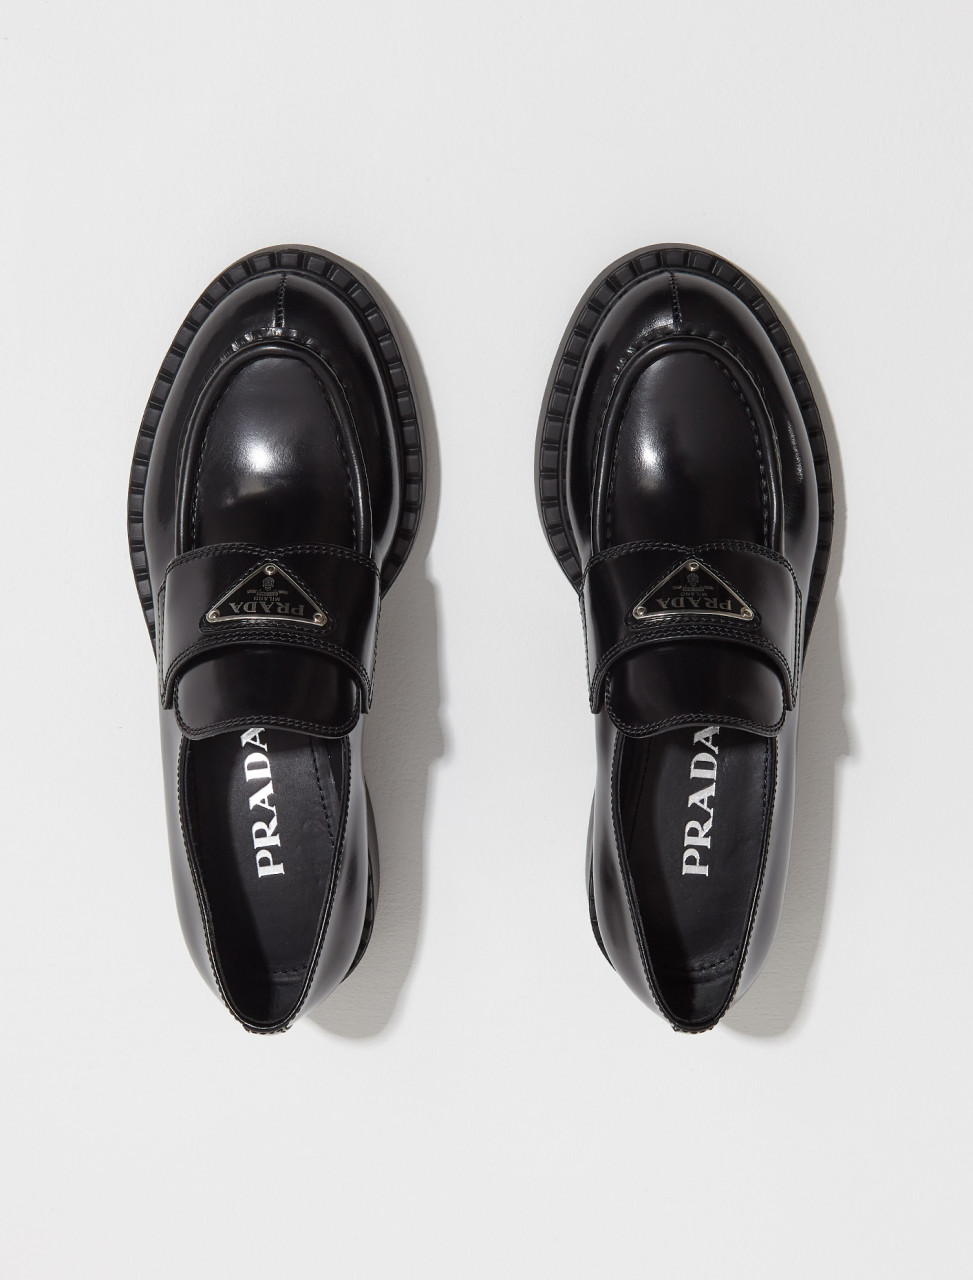 Prada Brushed Leather Loafers in Black | Voo Store Berlin | Worldwide